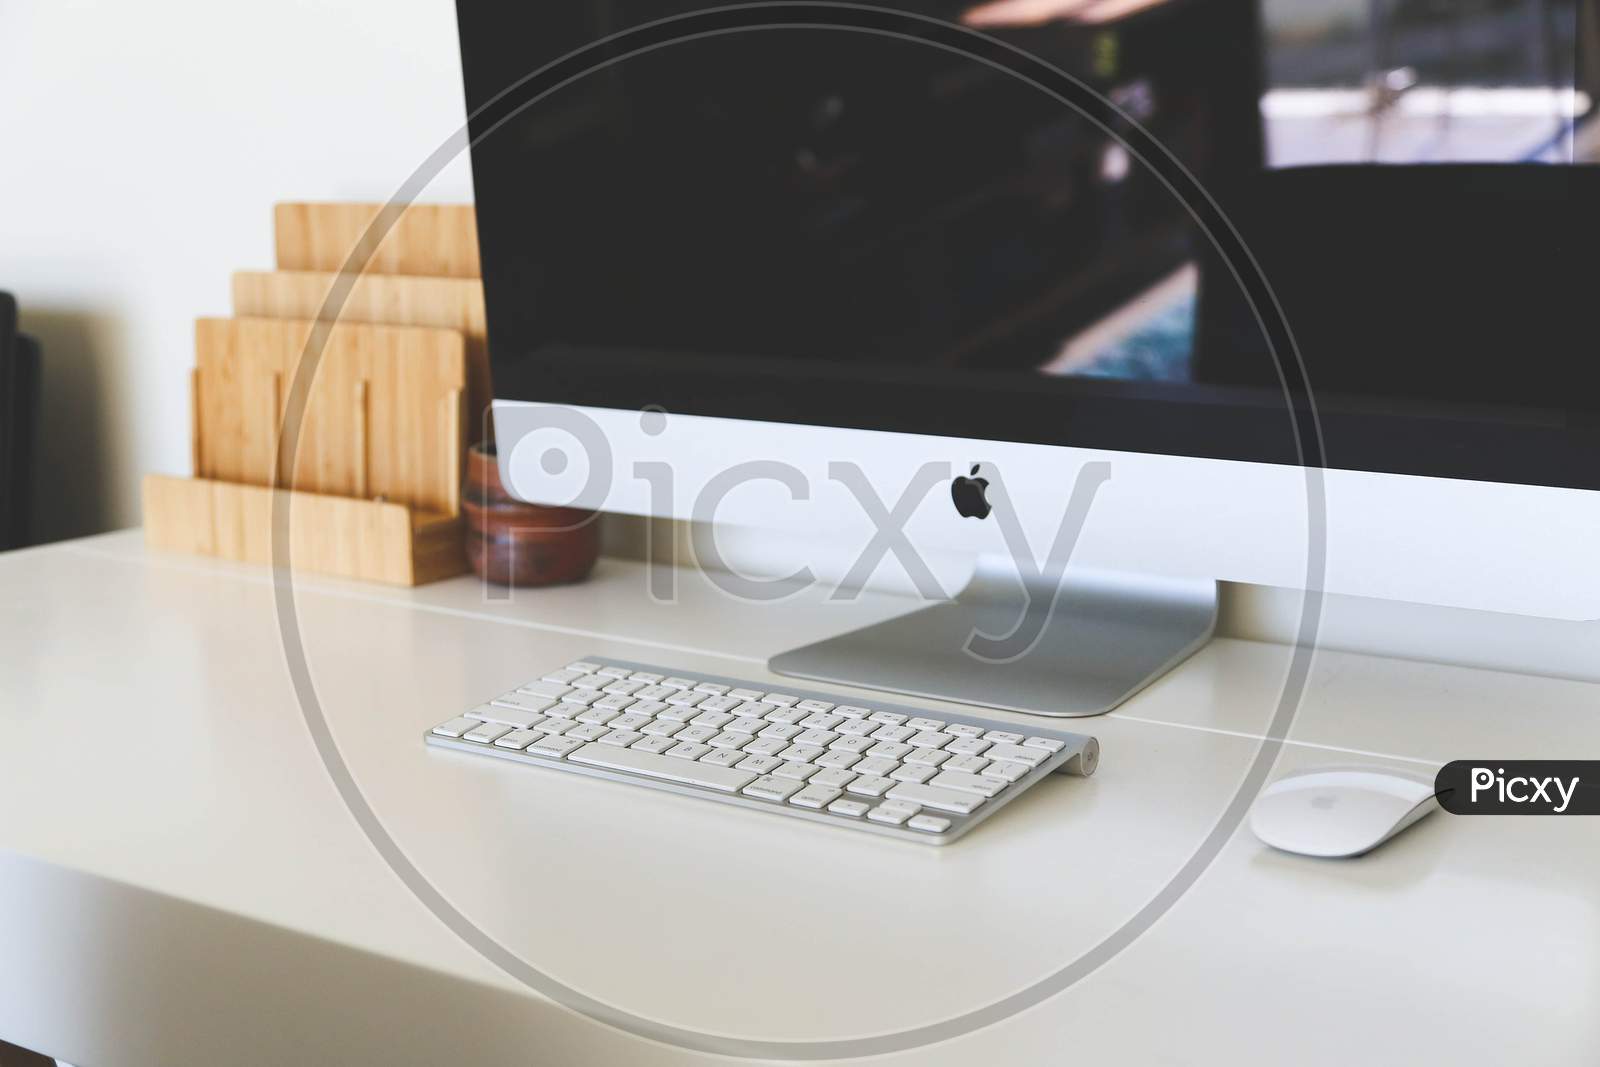 MAC Desktop with Keyboard